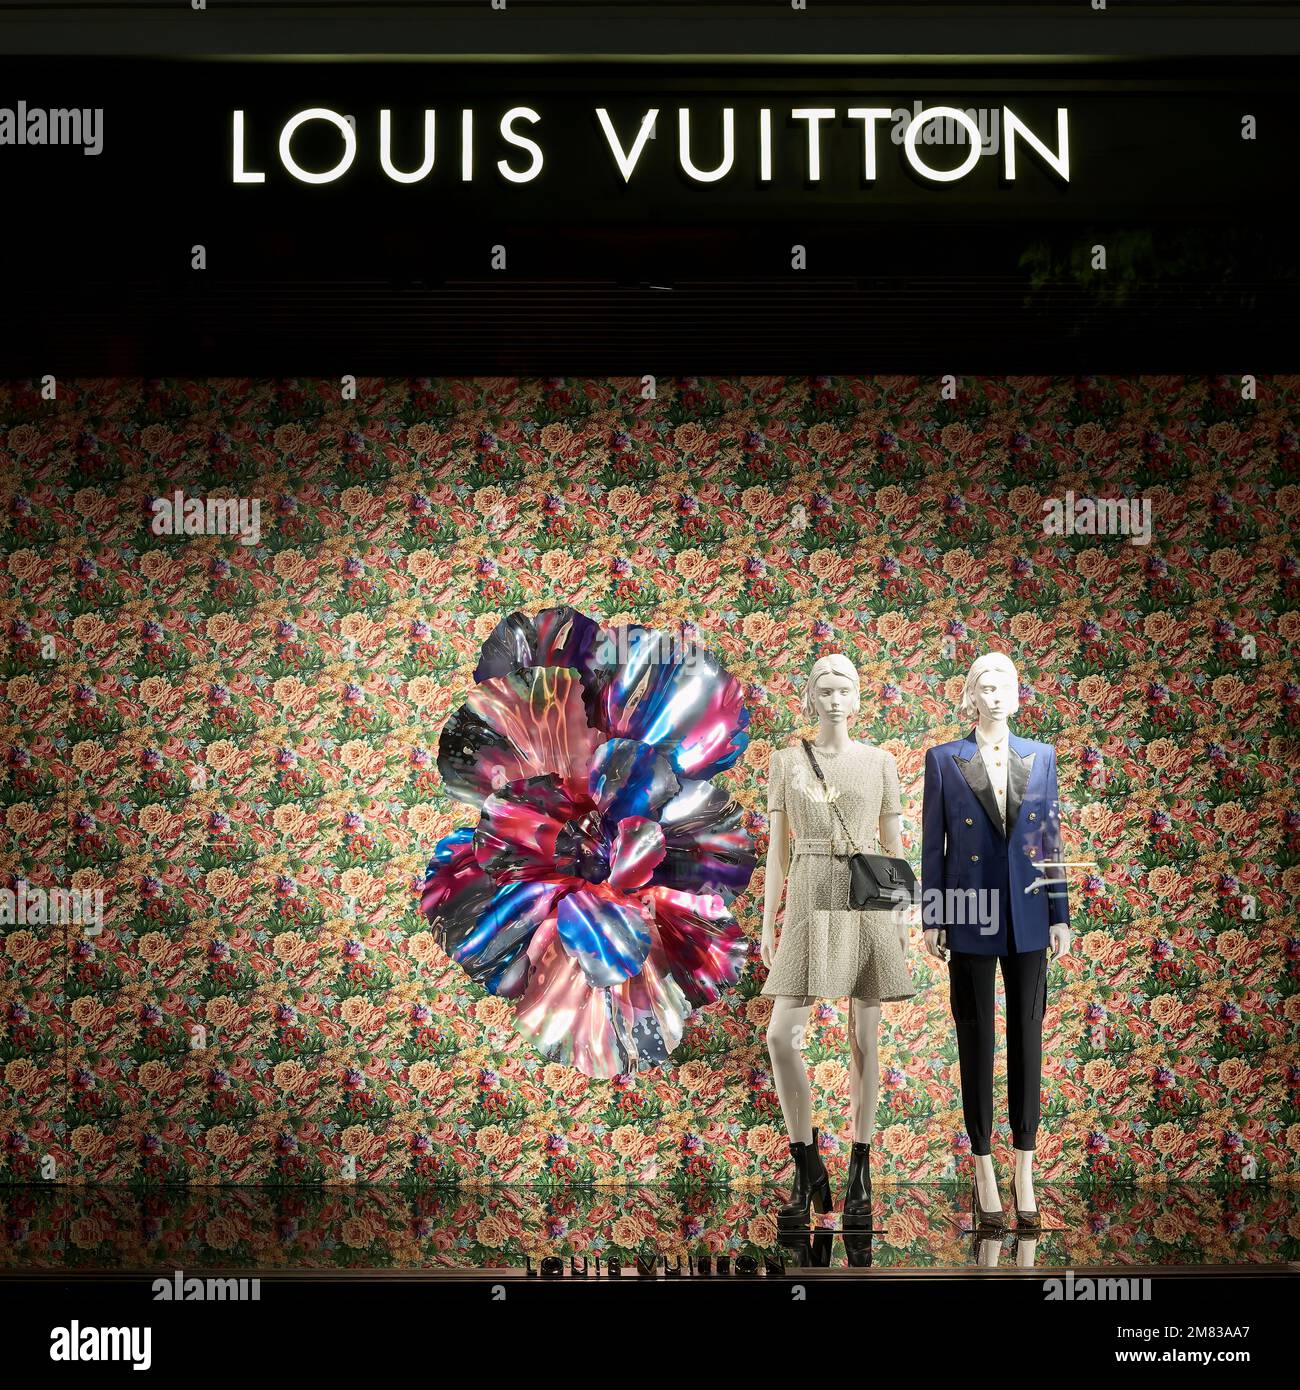 Louis Vuitton Fashion Boutique Editorial Photo - Image of front, label:  42109231